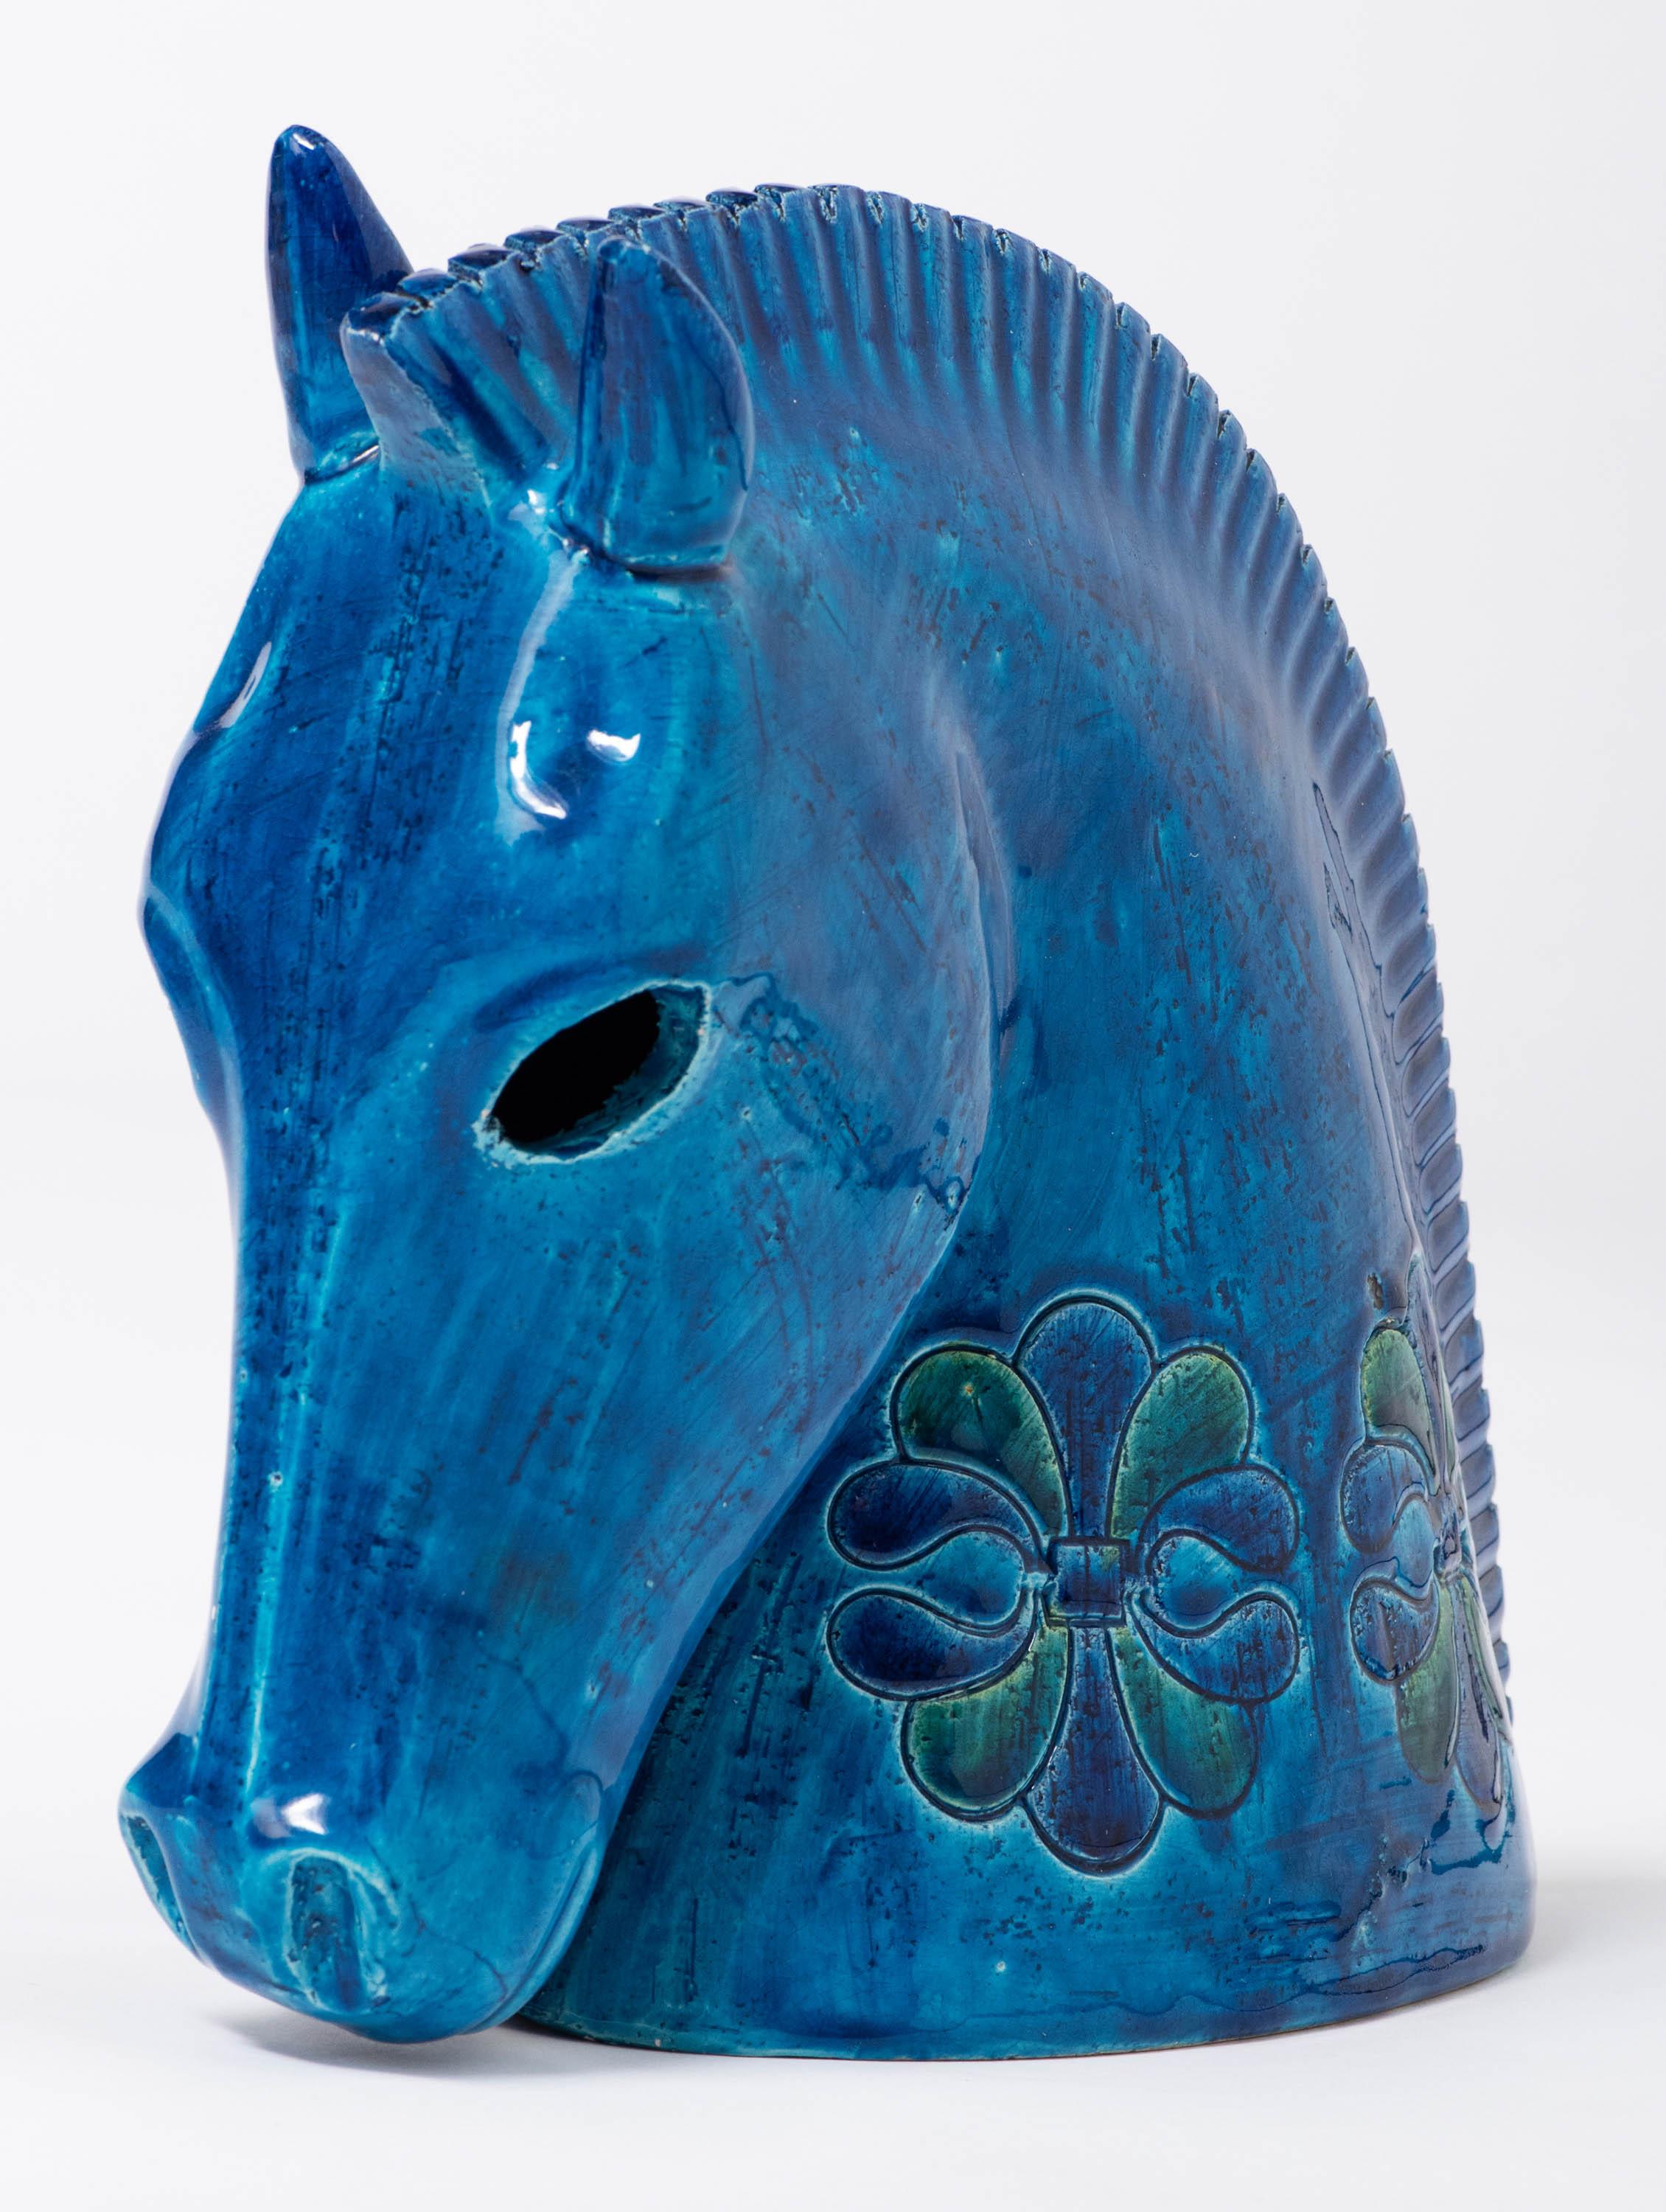 Italian Ceramic Sculpture of a Horse’s Head by Aldo Londi for Bitossi, Italy, circa 1950